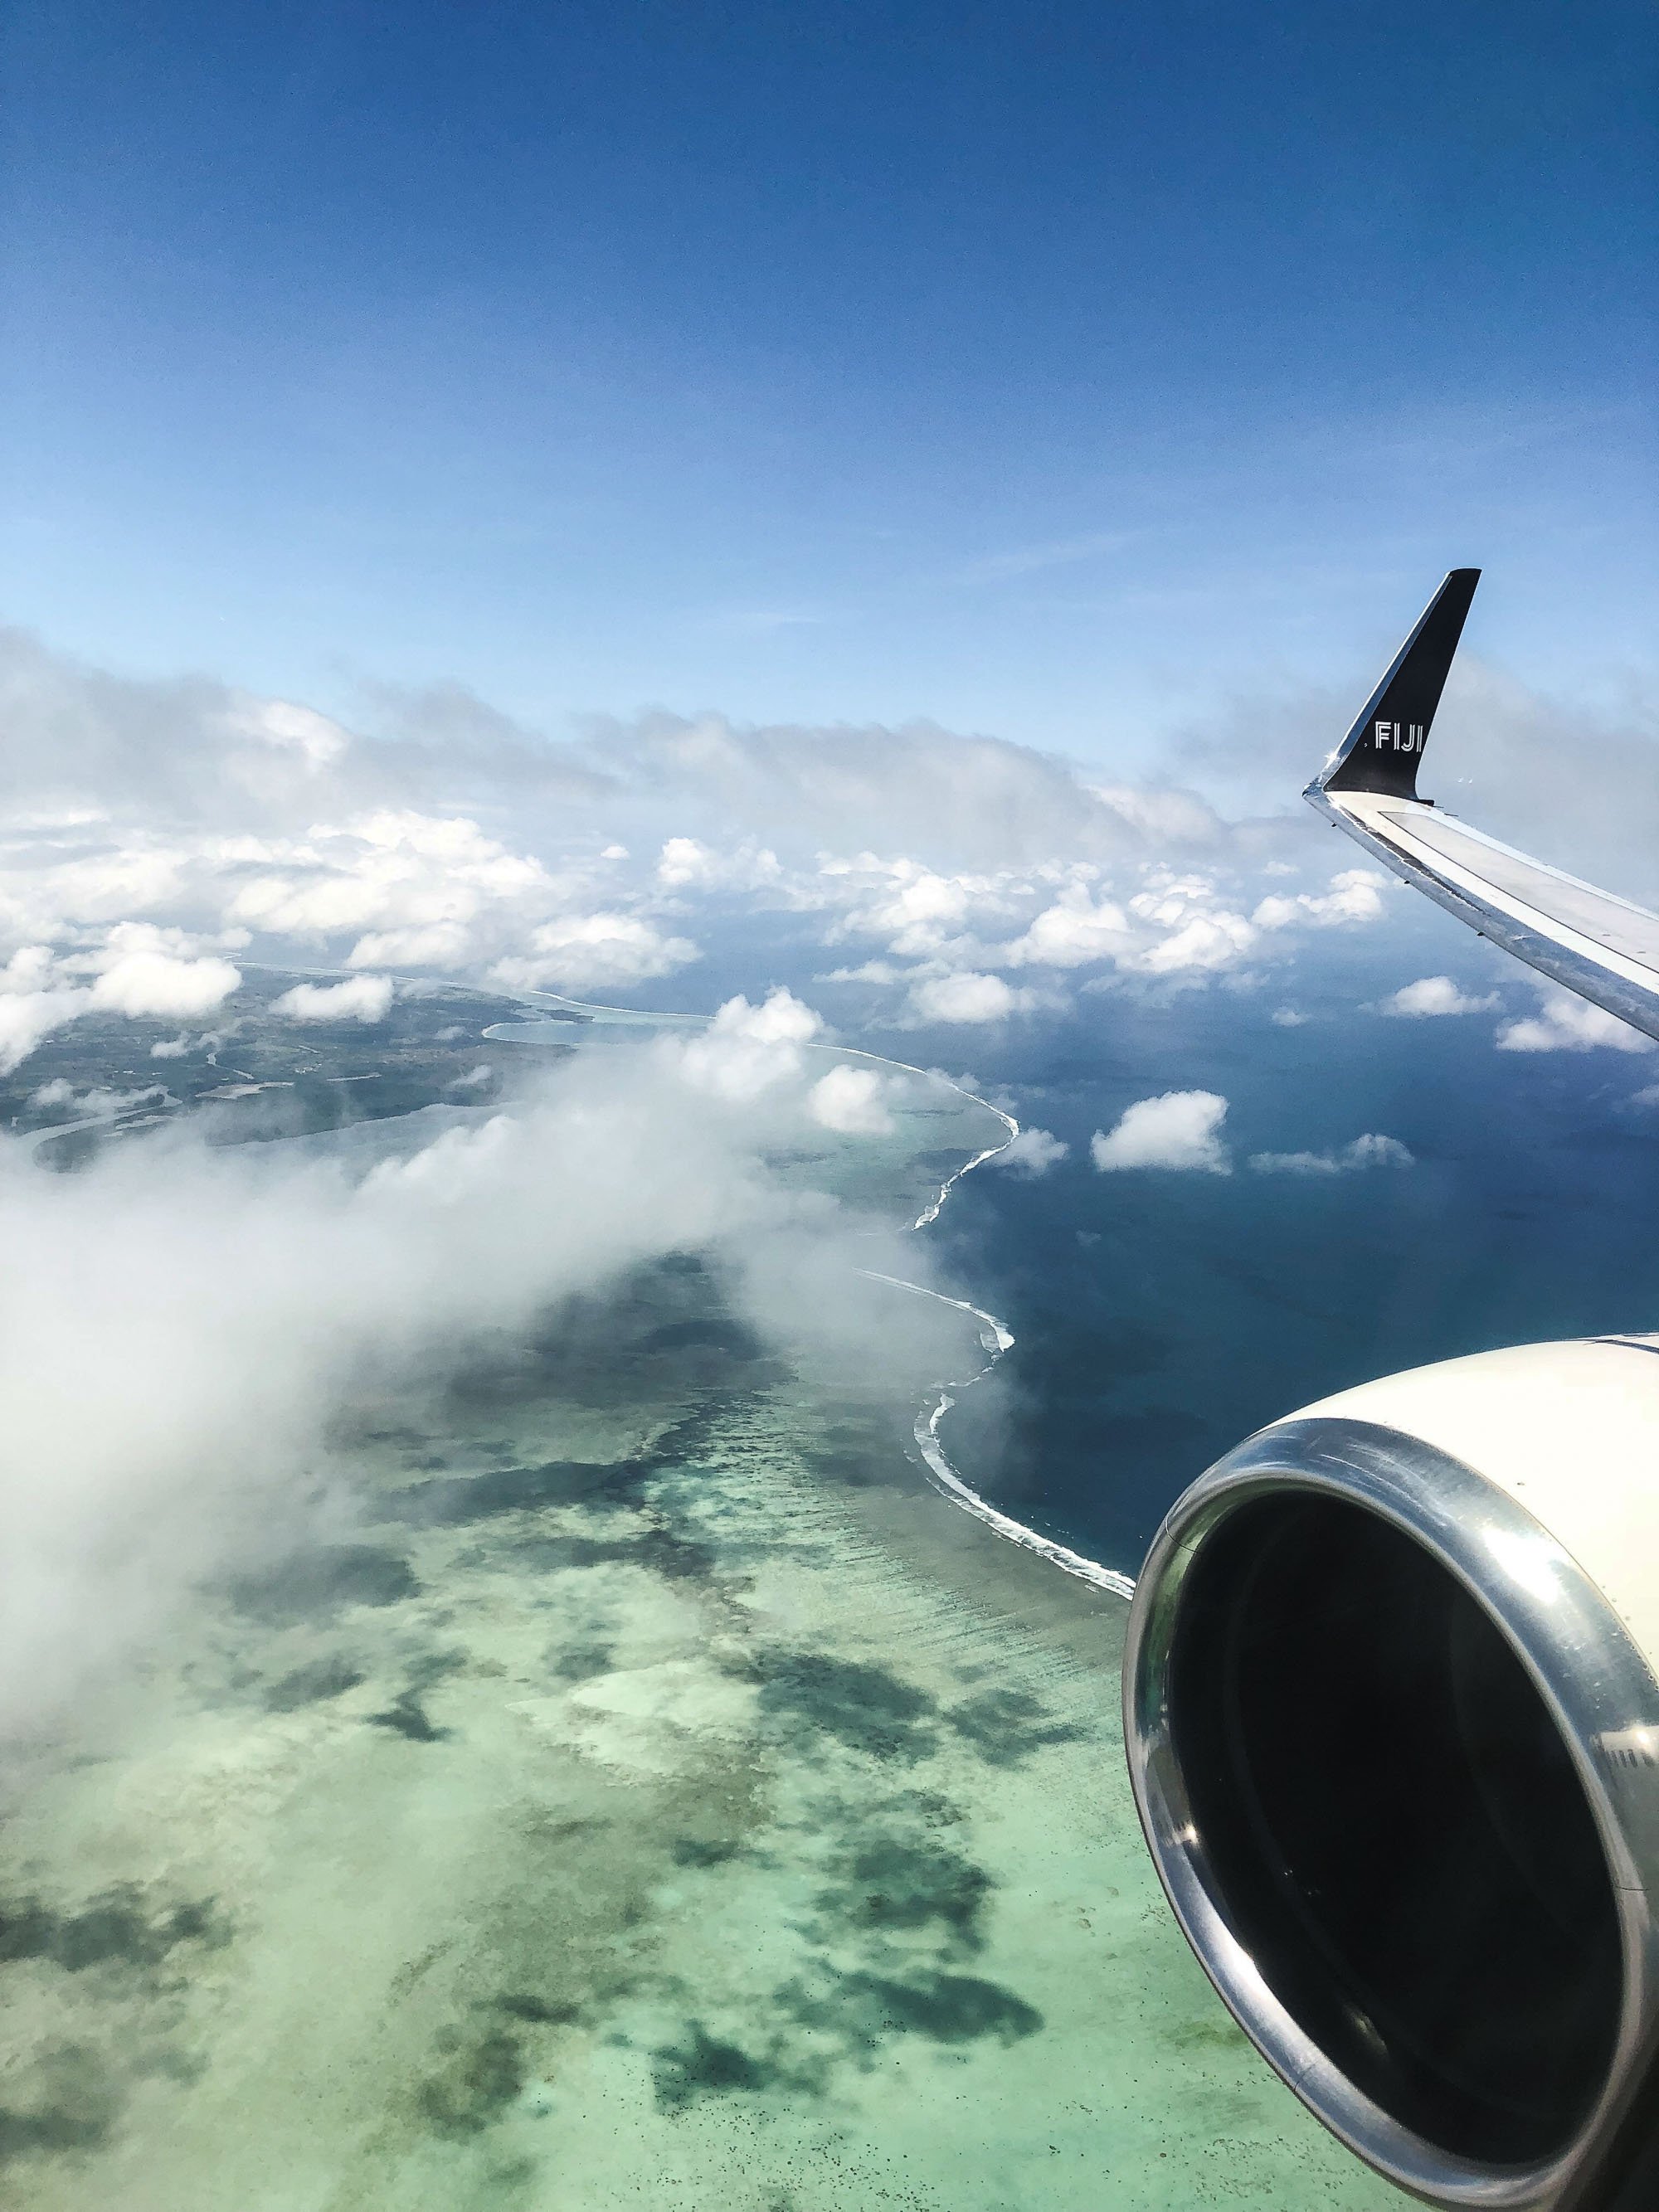 Fiji Islands – Honeymoon at its best | Travel Diary